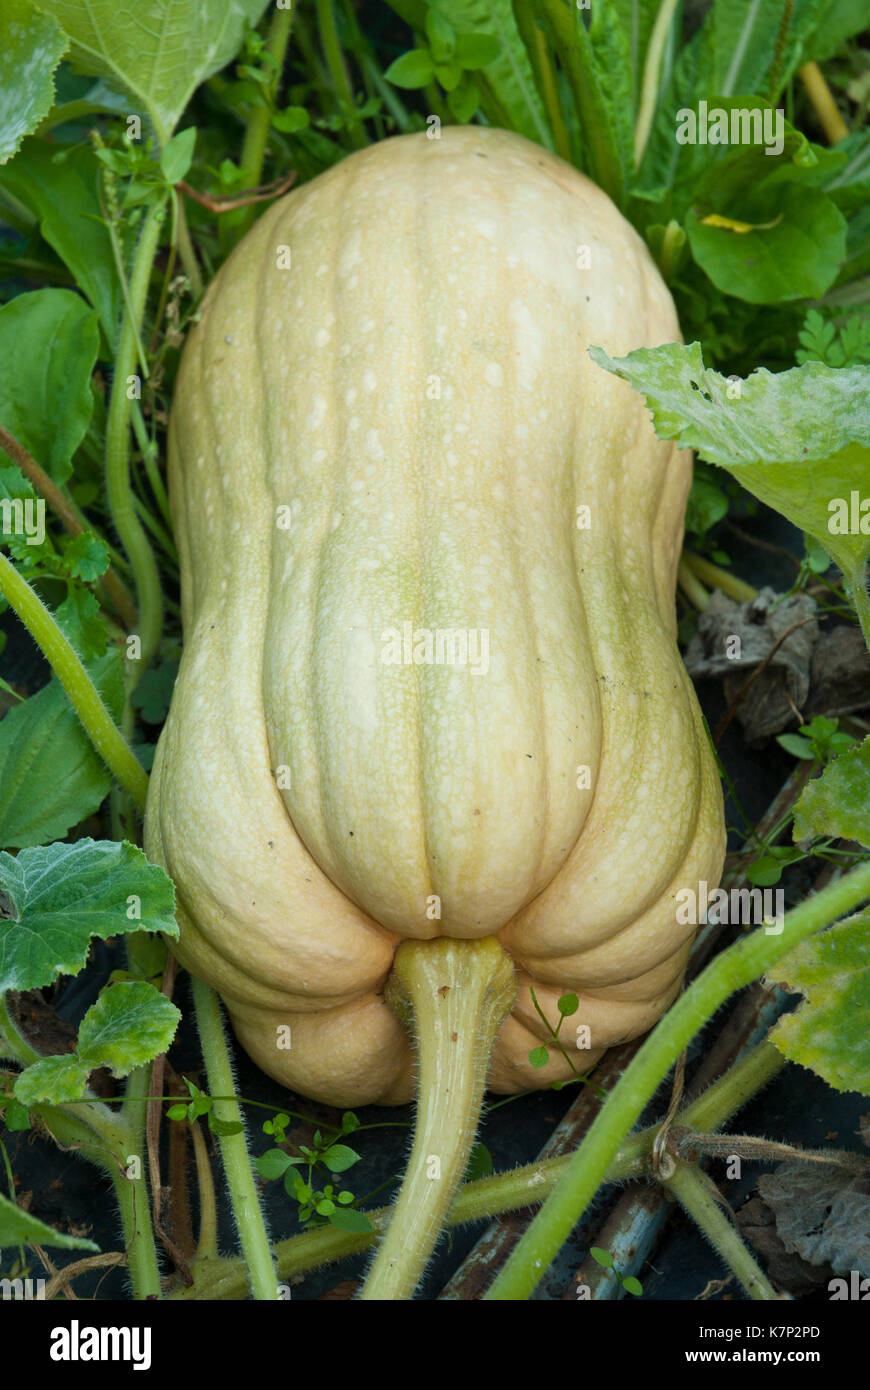 Cream elongated pumpkin growing in siol Stock Photo